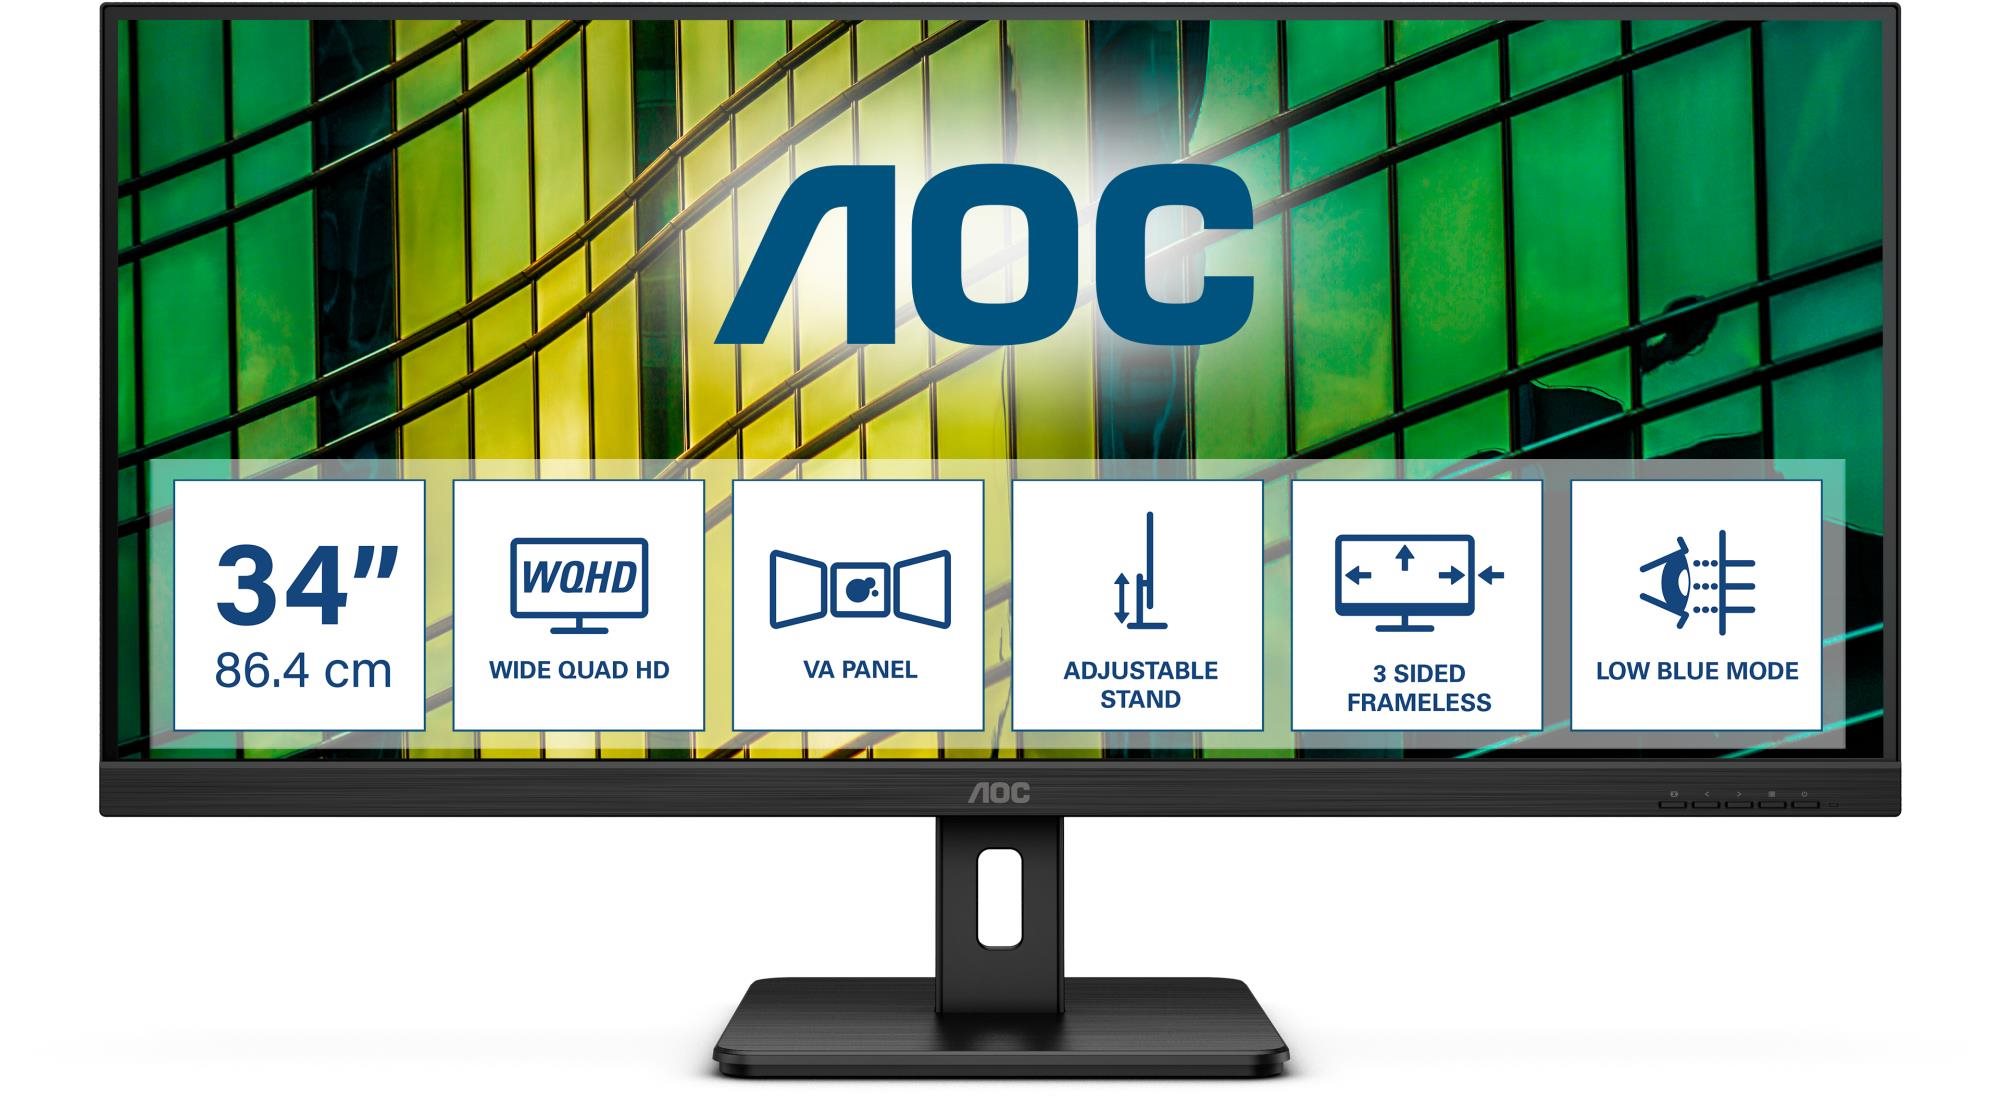 LCD monitor 34" AOC U34E2M